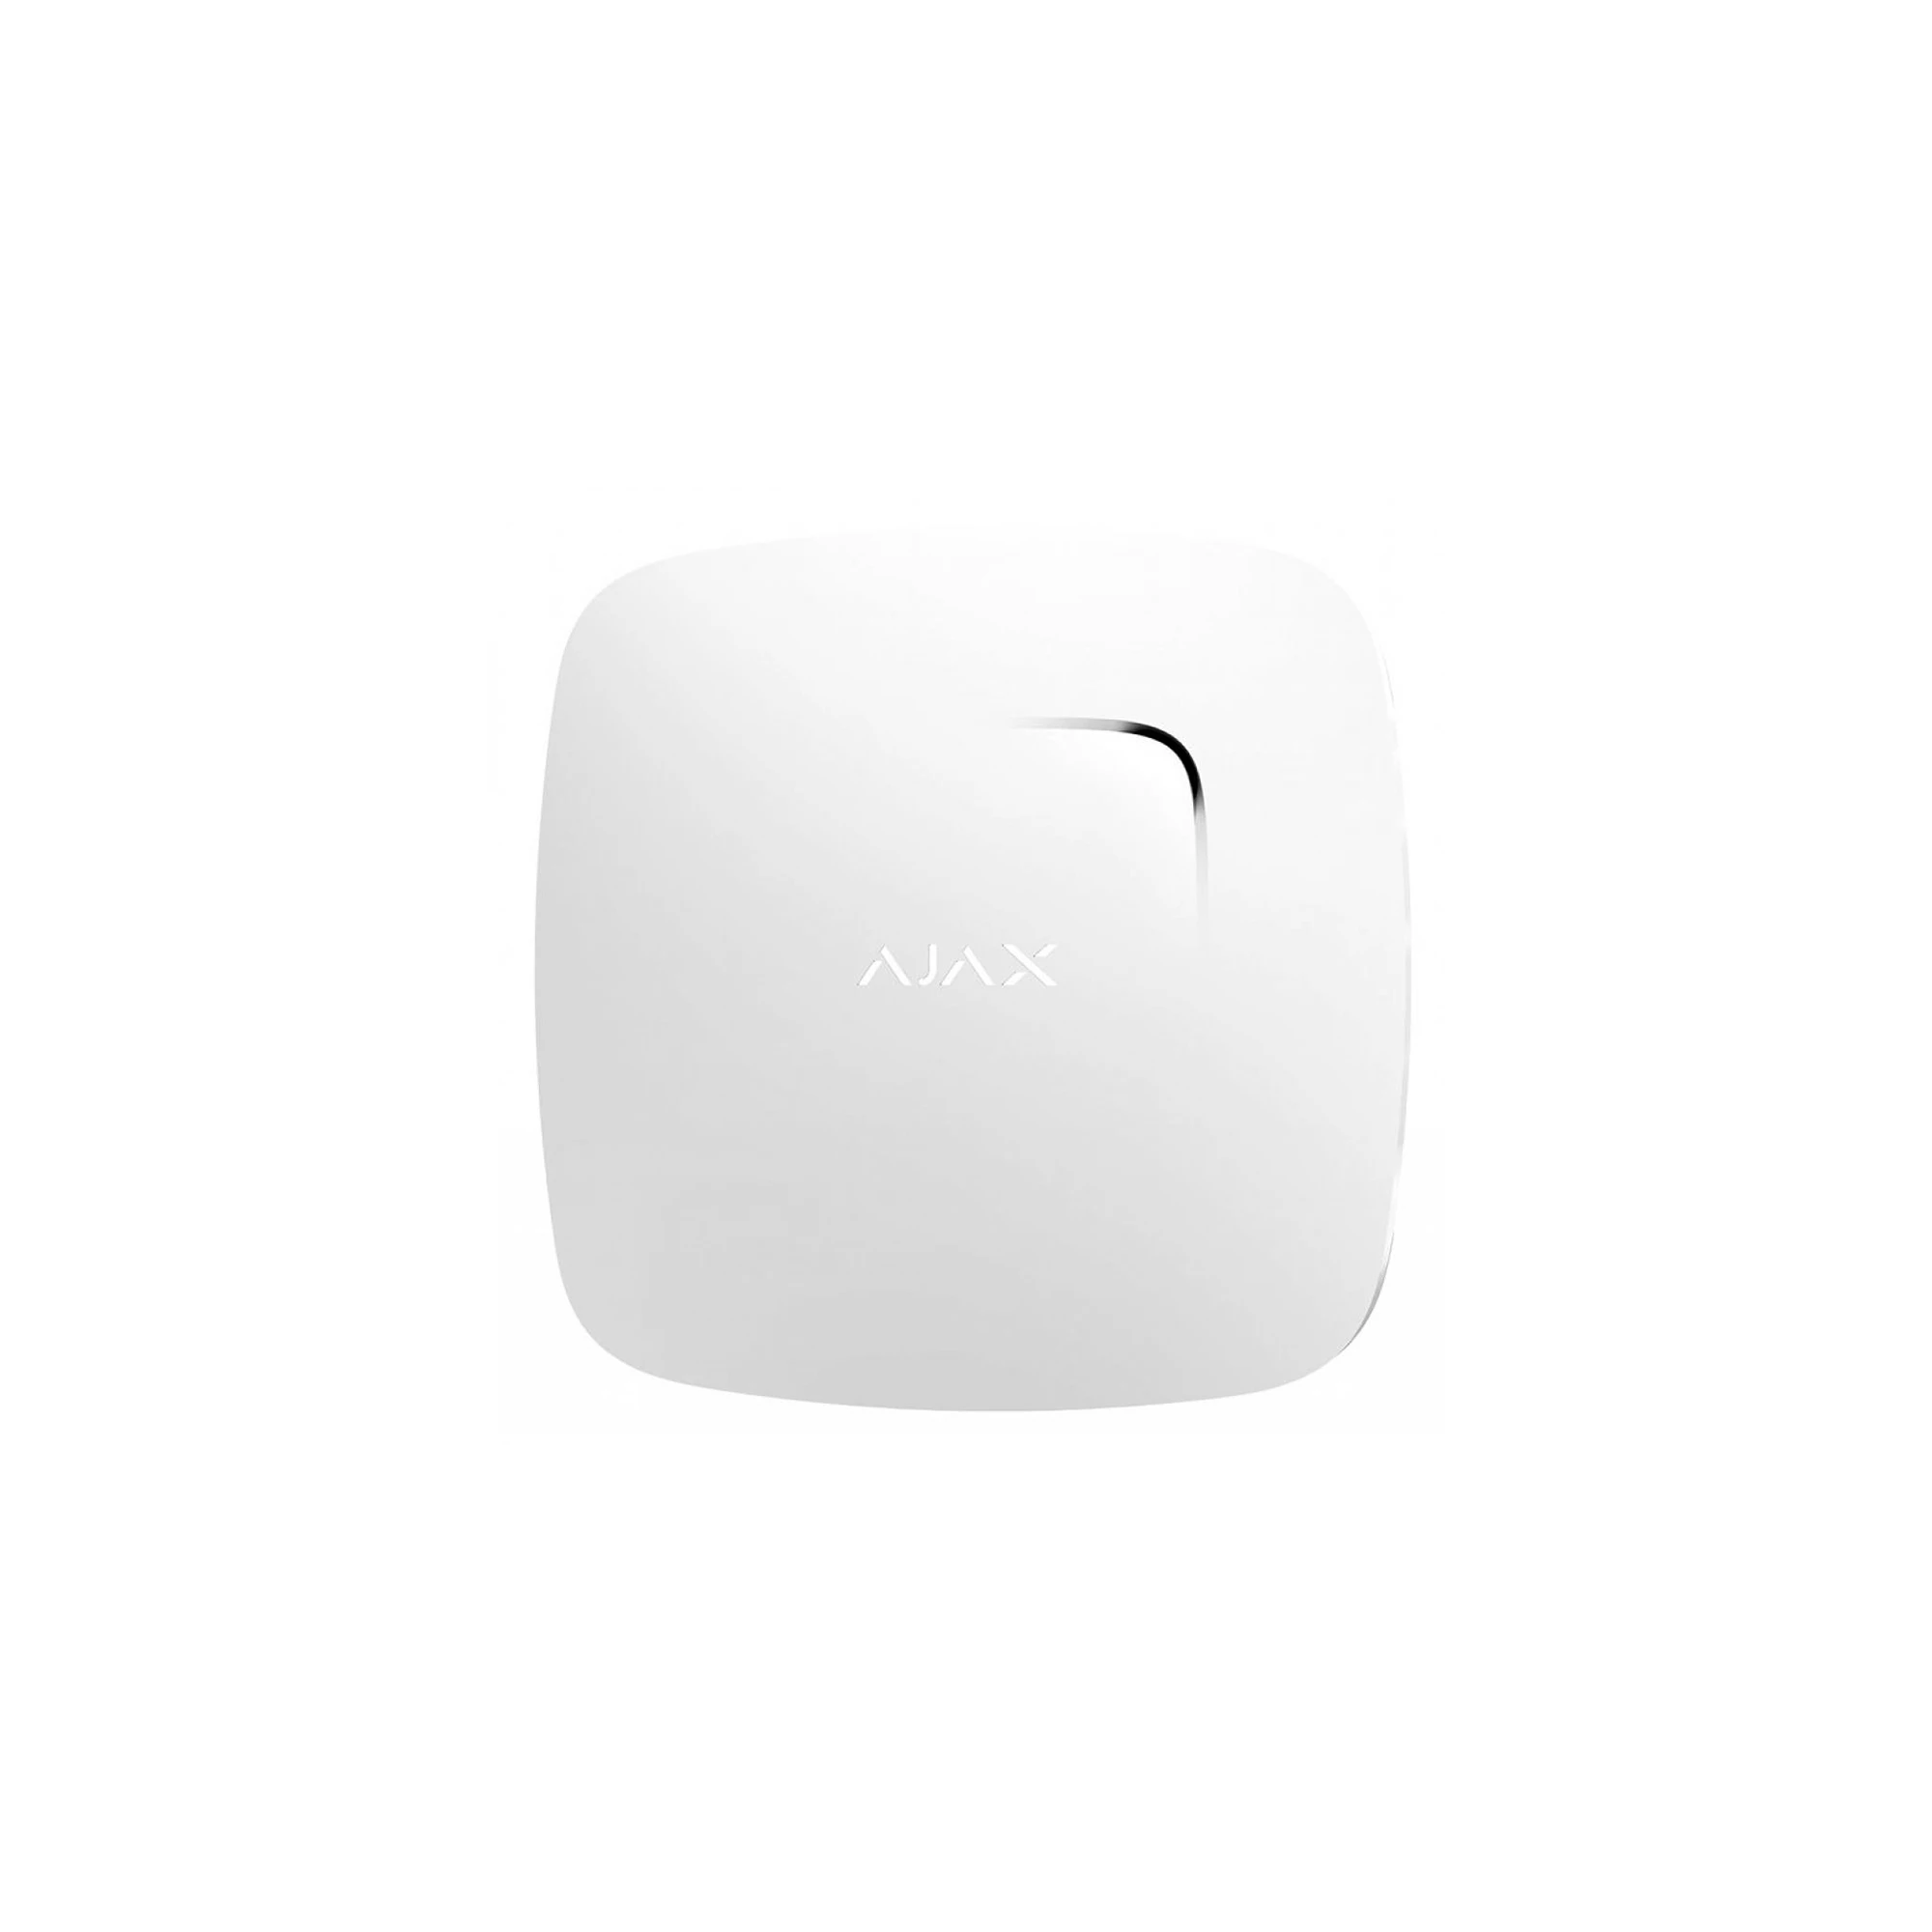 Ajax FireProtect White - бездротовий пожежний датчик з сенсорами температури